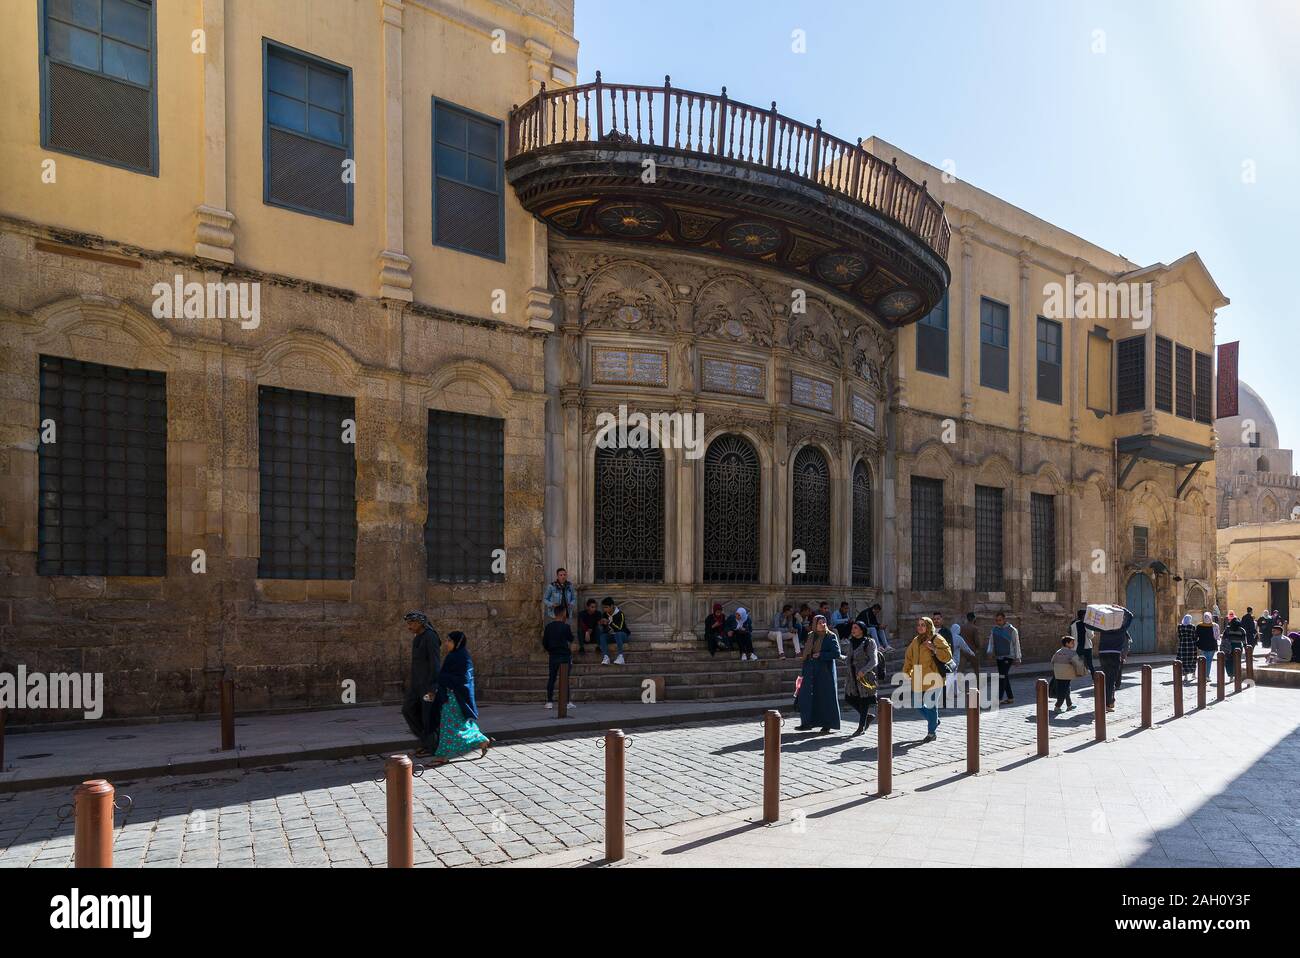 Cairo, Egypt- December 14 2019: Facade of Ottoman era historic Mohamed Ali Sabil building, Moez Street, Nahassen district, Medieval Cairo, Egypt Stock Photo